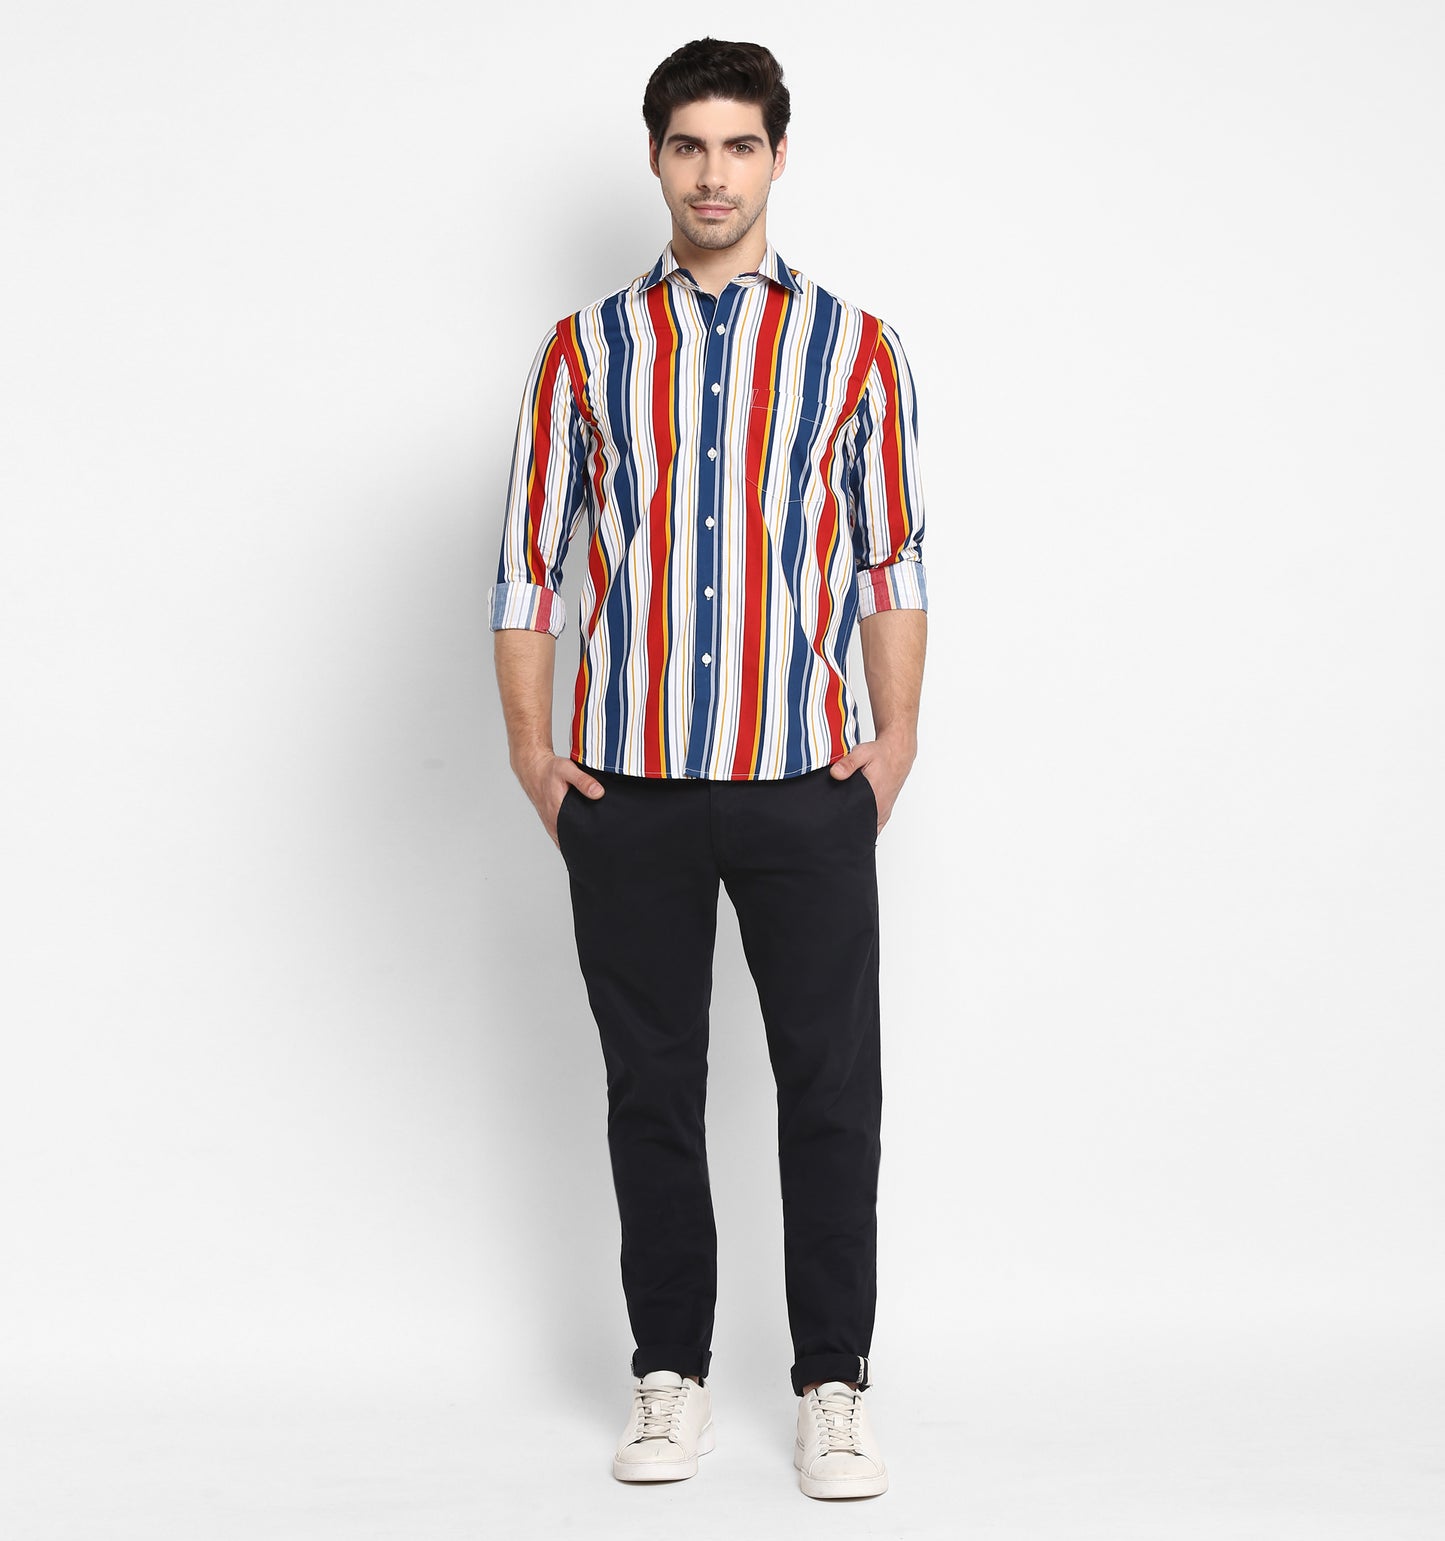 Colorburst stripes shirt